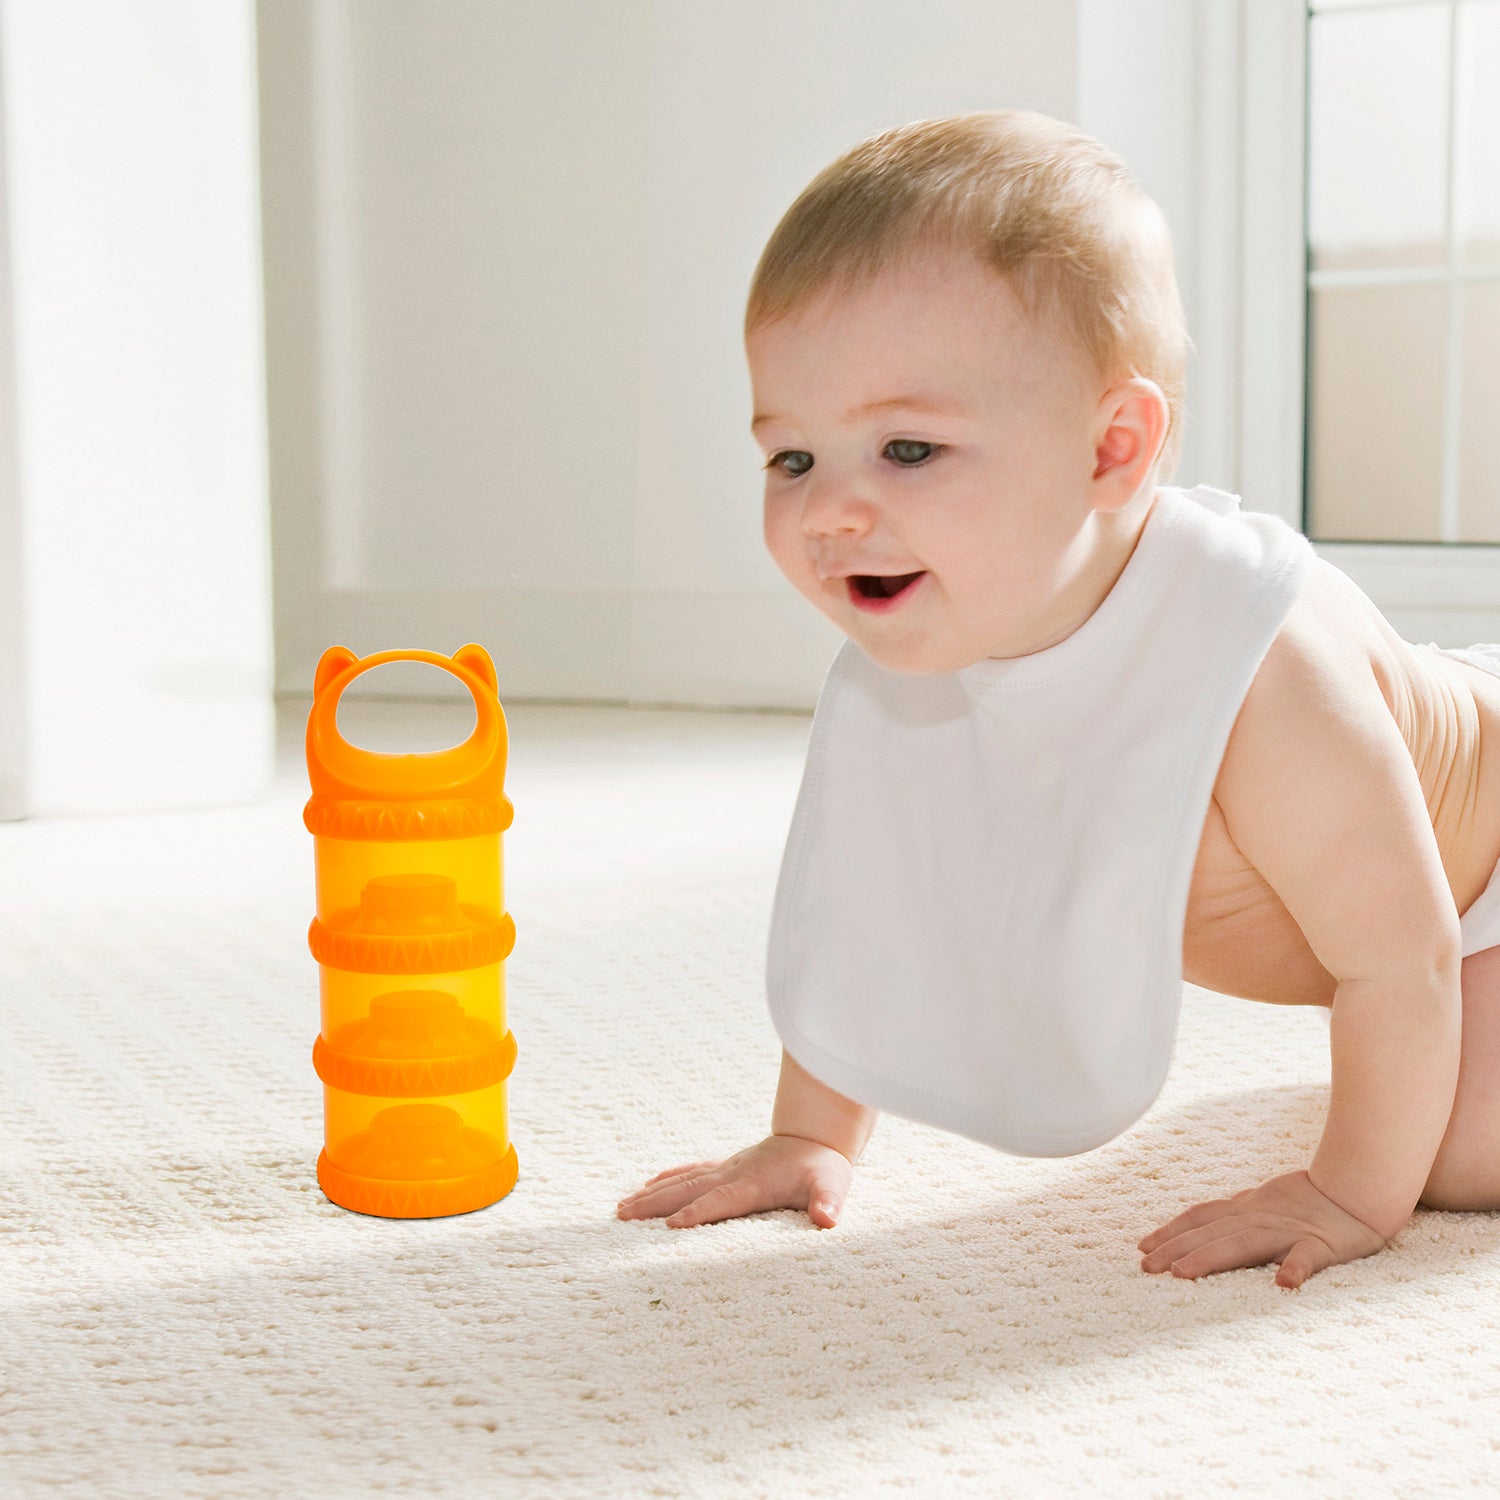 Baby Moo 3 Layer Portable BPA Free Milk Powder Container - Orange